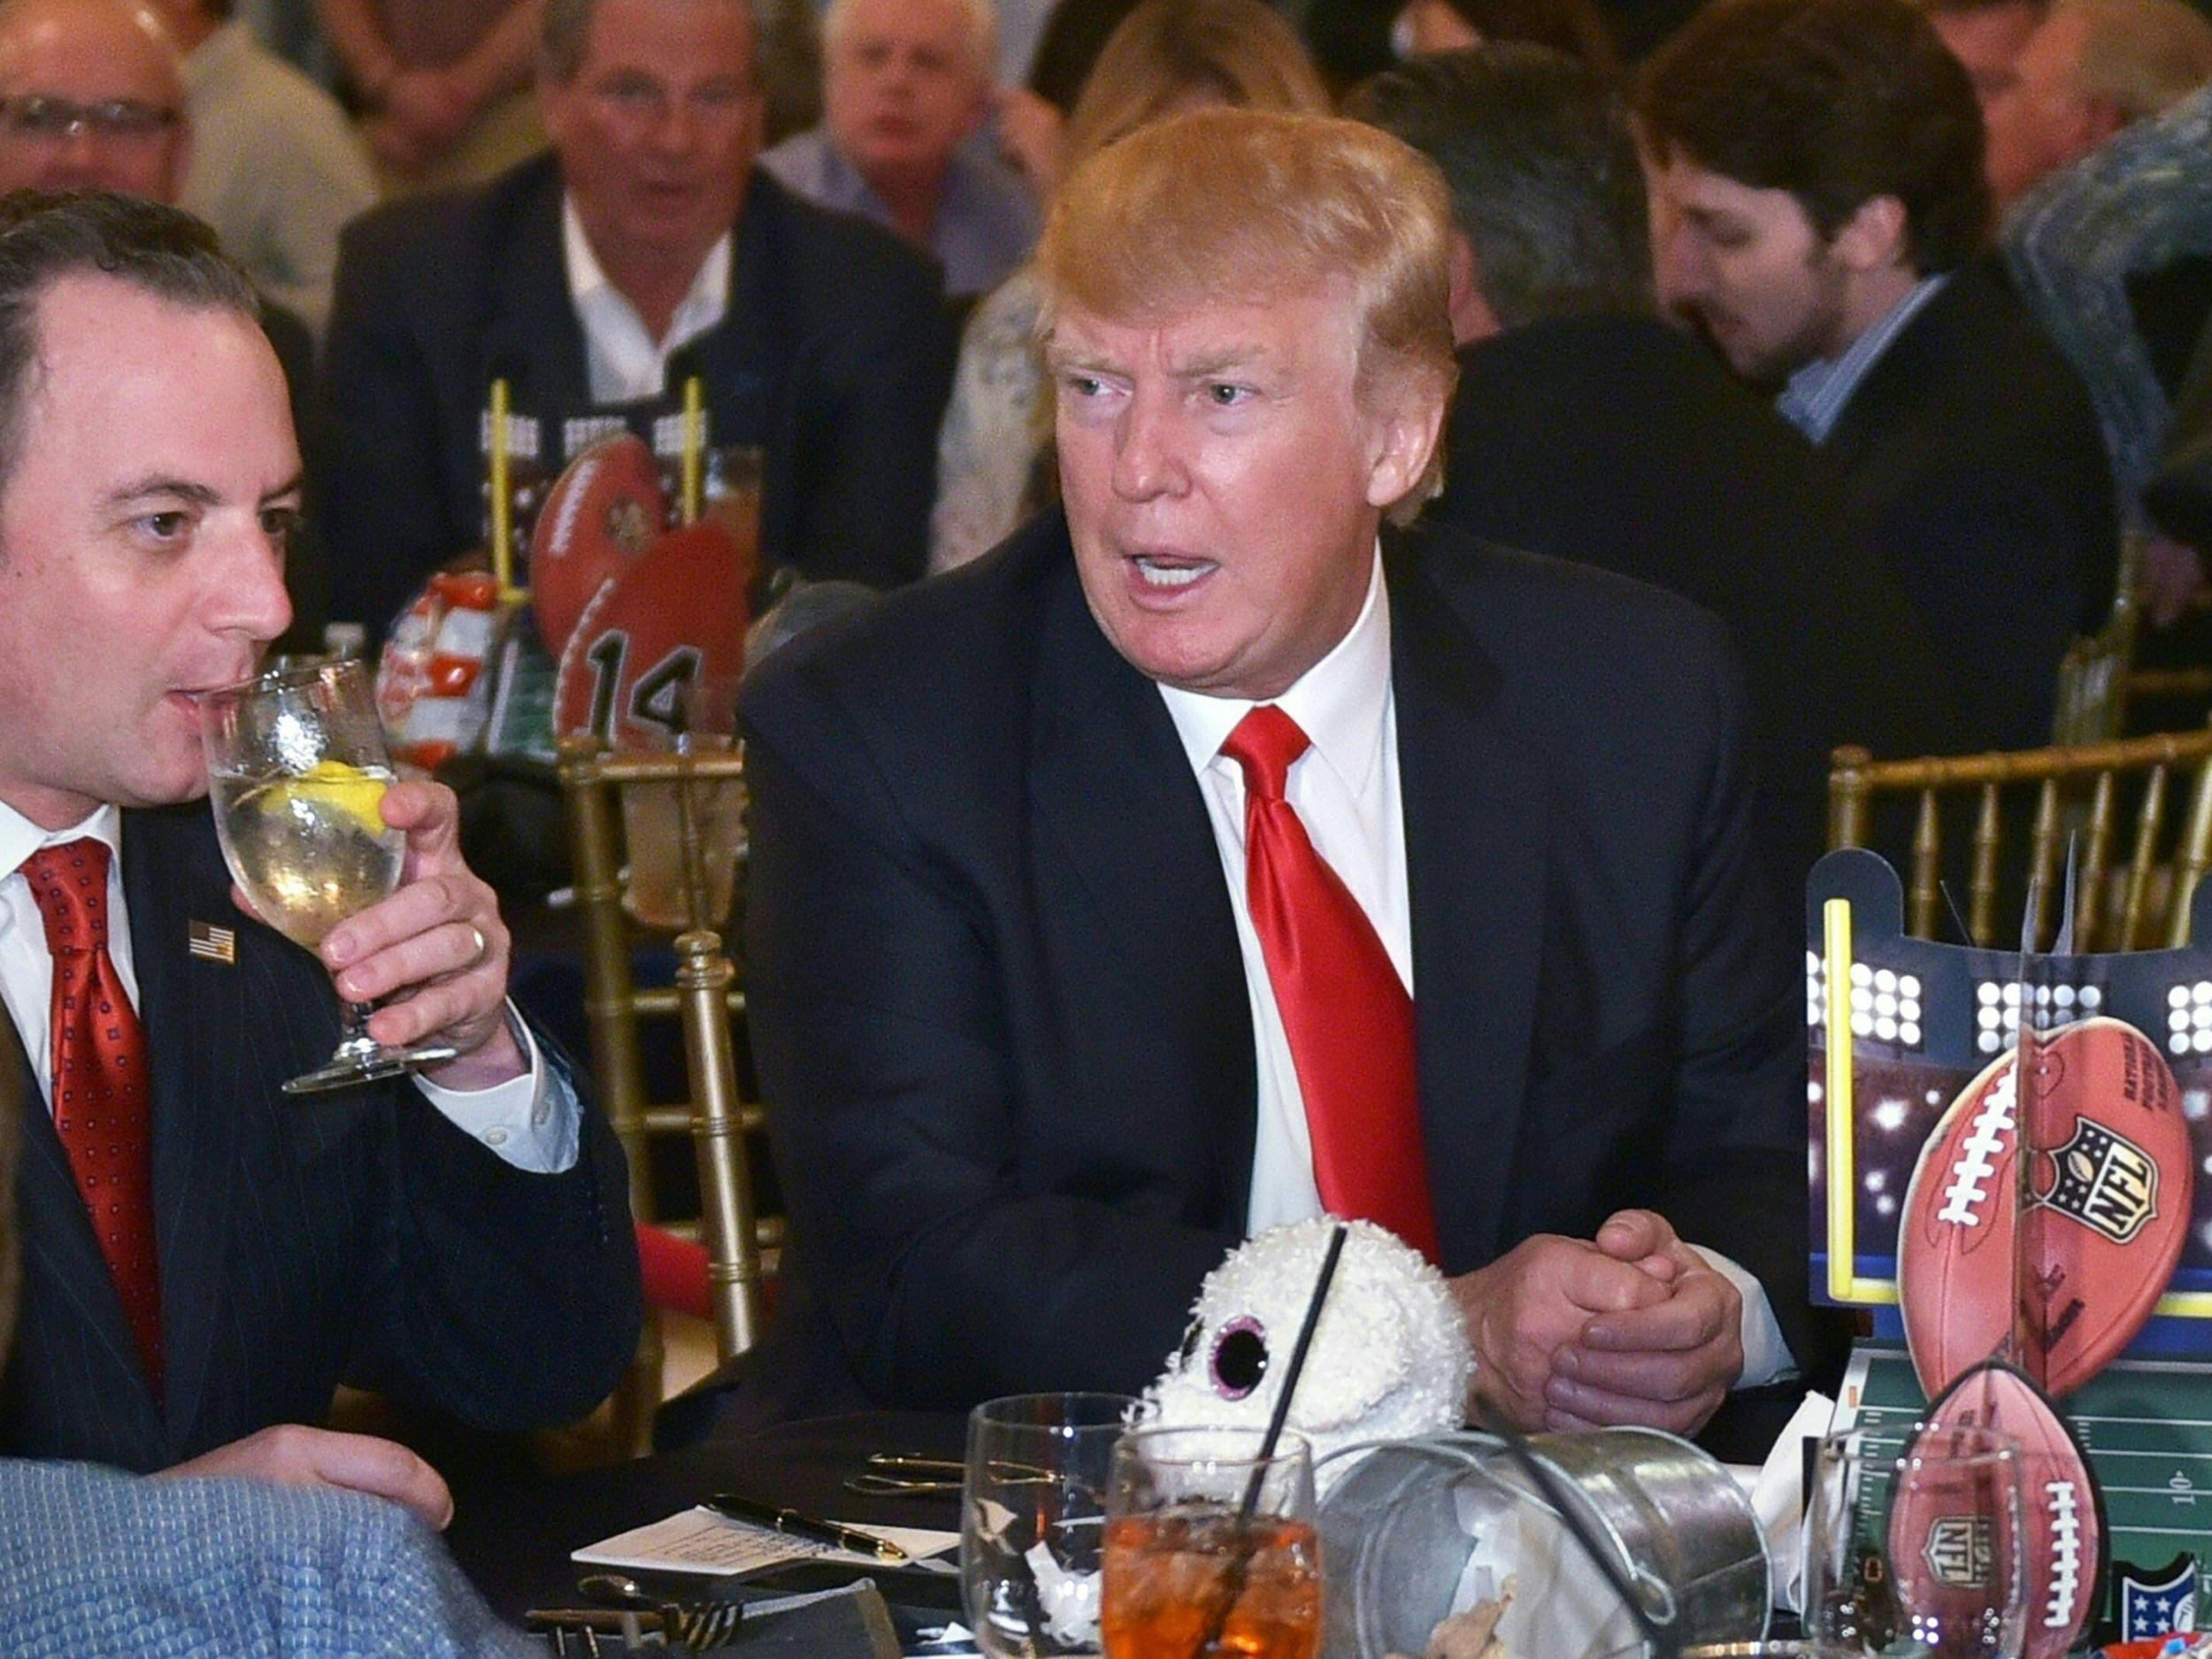 Trump held a Super Bowl party in Florida